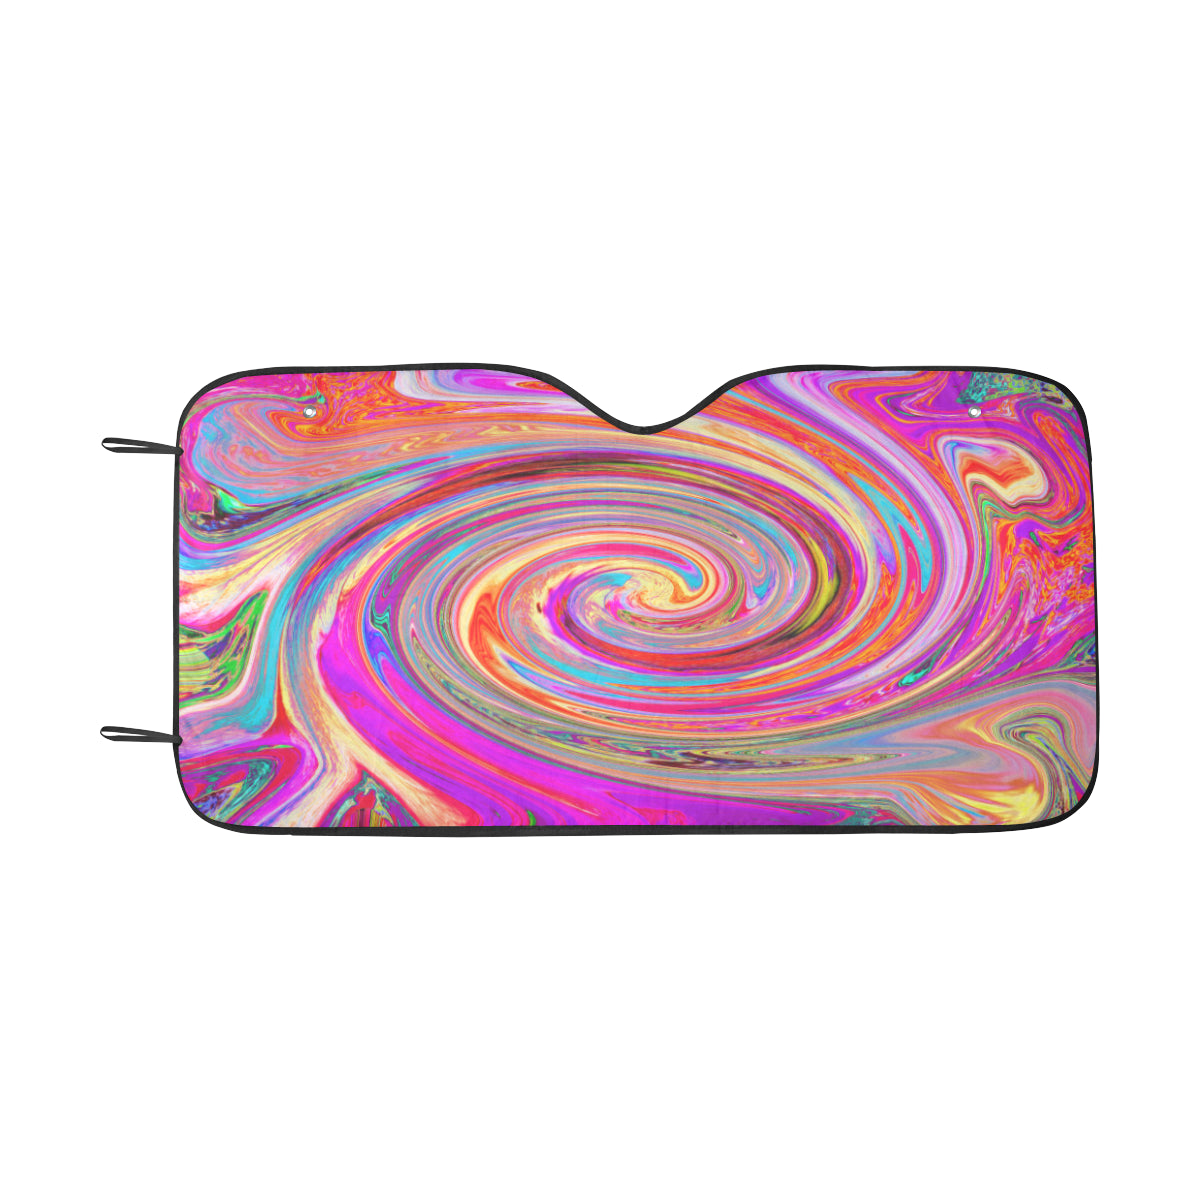 Auto Sun Shades, Colorful Rainbow Swirl Retro Abstract Design